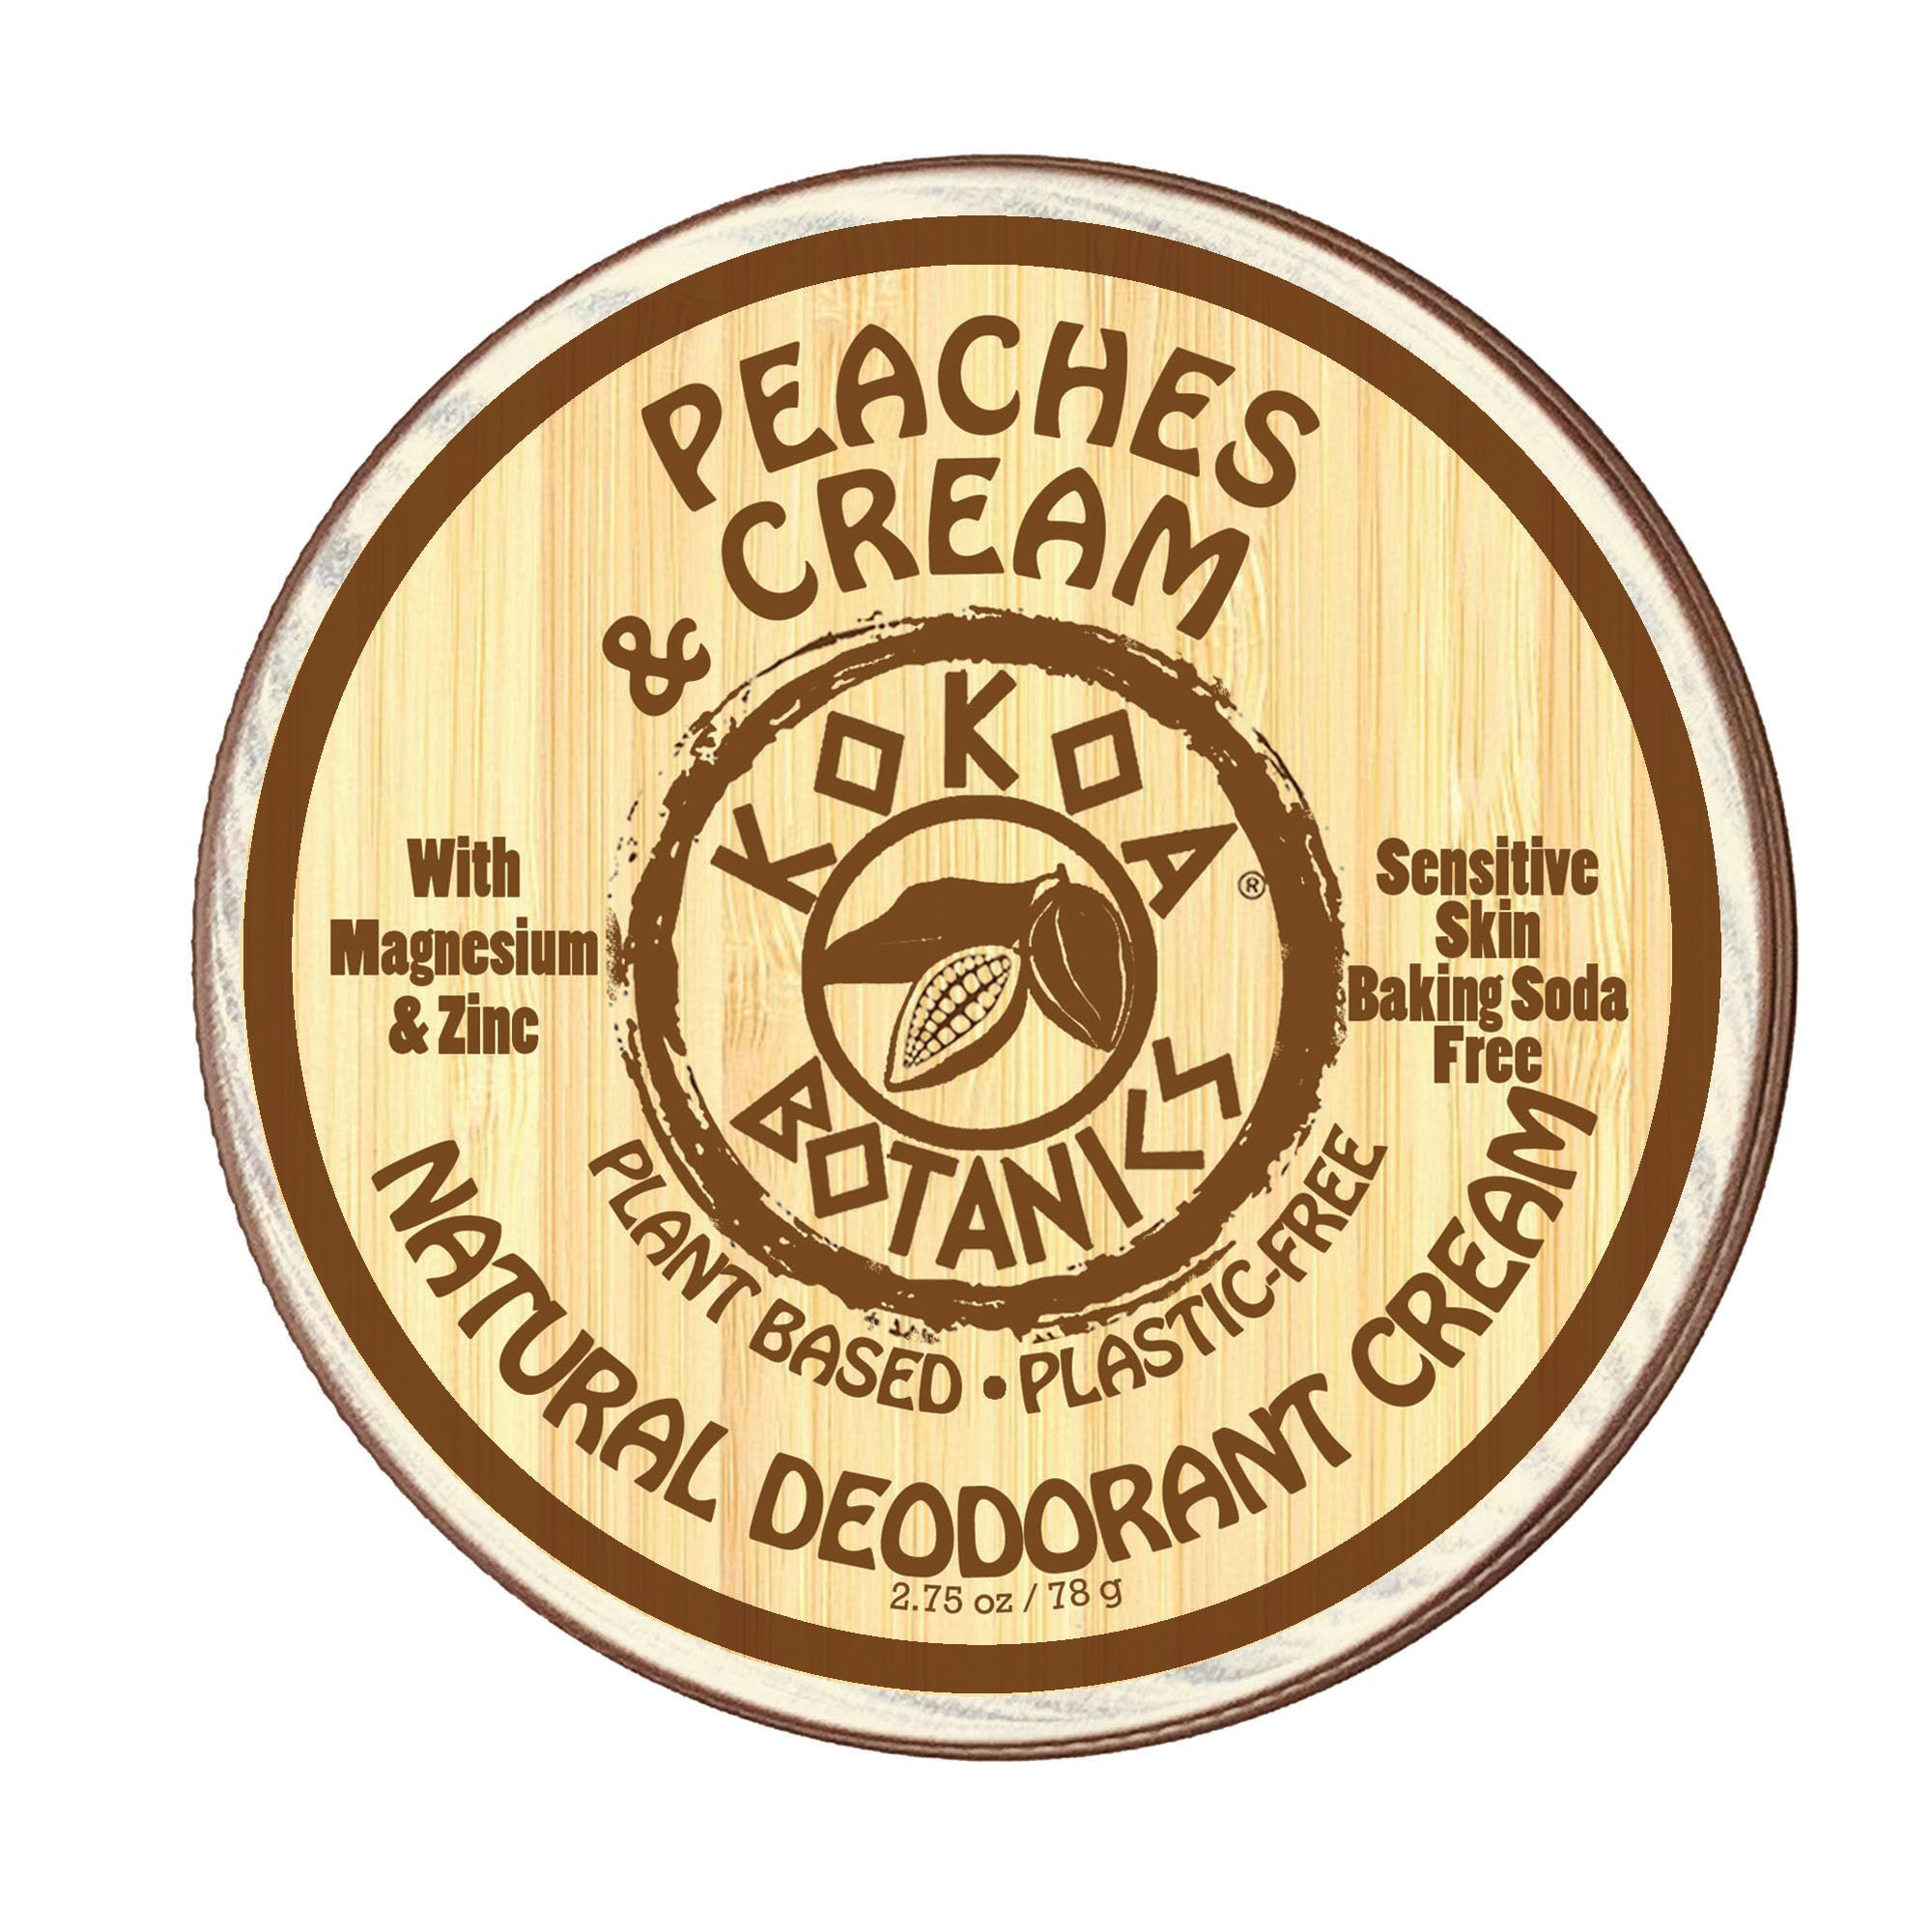 Peaches and Cream - Natural Deodorant Cream - Baking Soda Free  - 2.5 oz